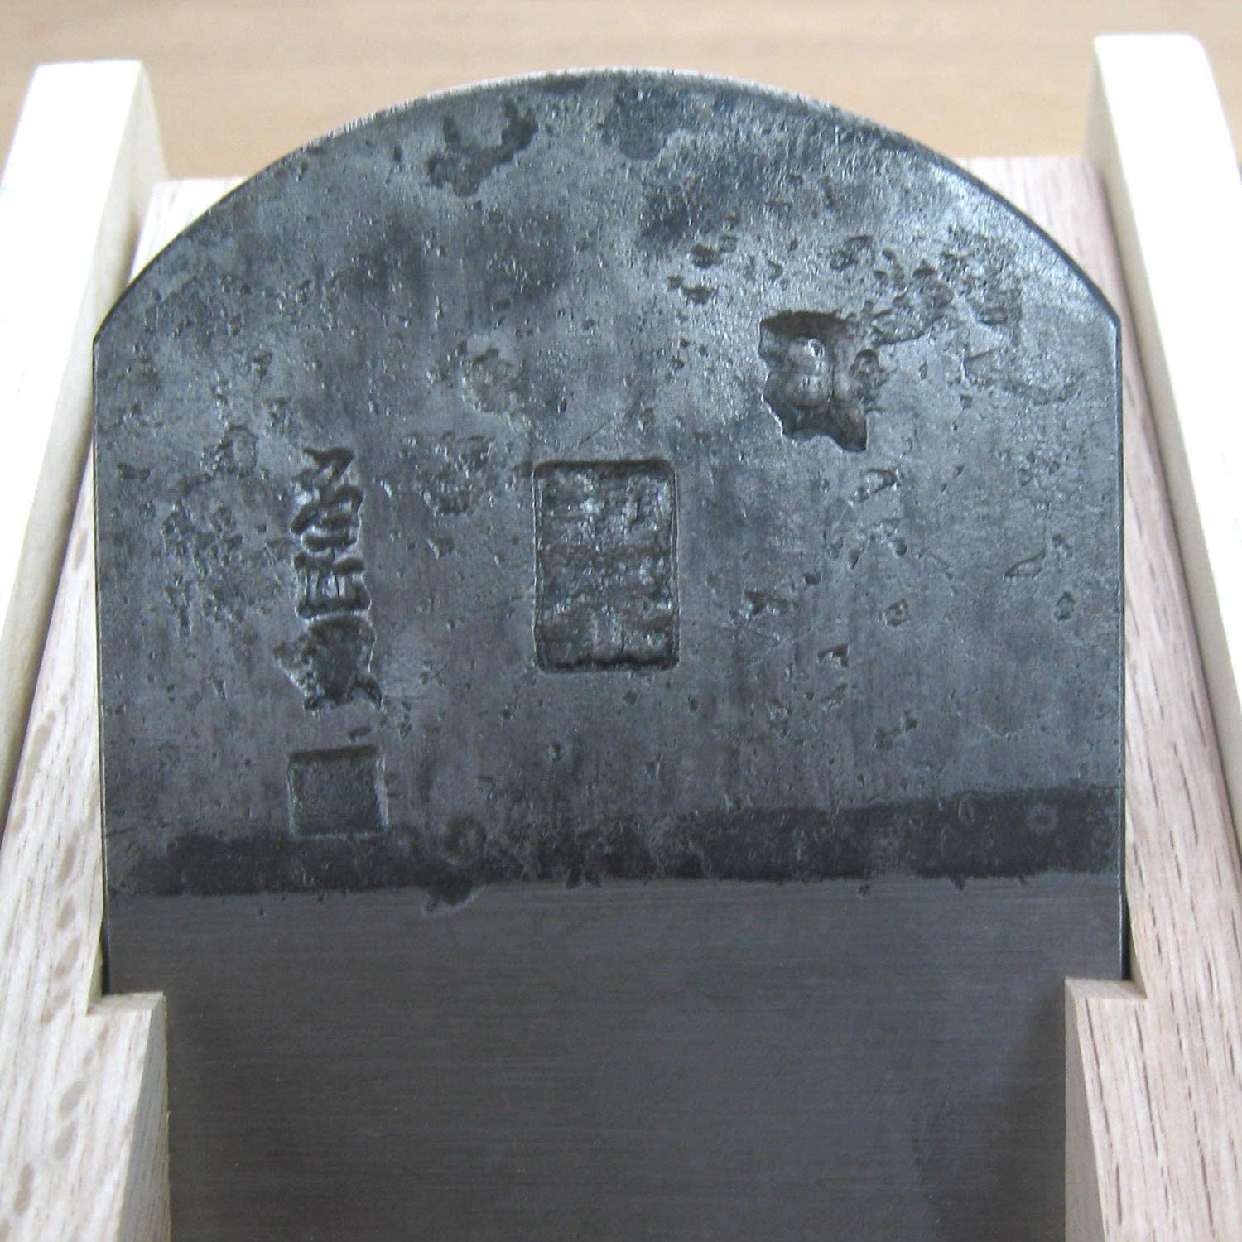 Nagao(ナガオ) 燕三条 鰹節削り器 鰹箱 SEN(栓)の商品画像5 